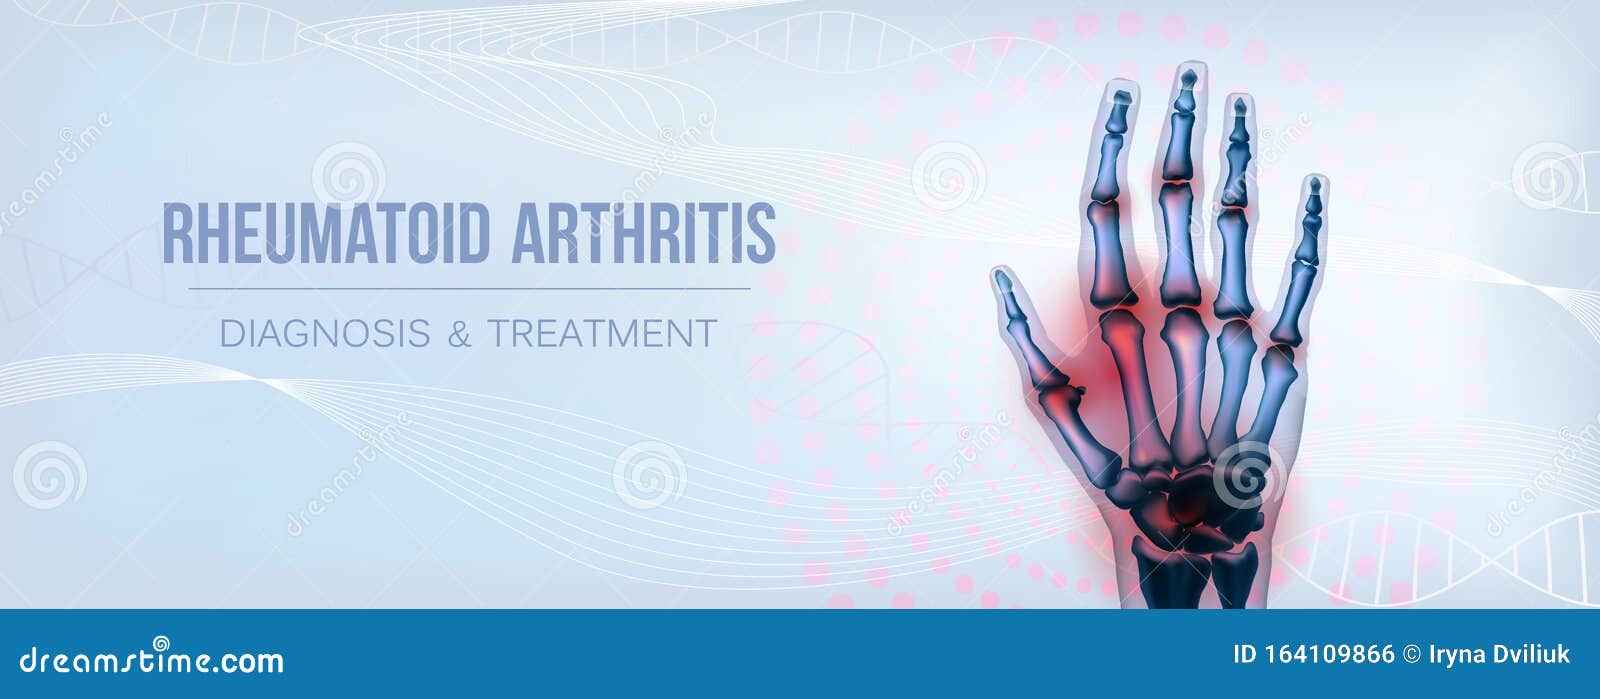 horizontal rheumatoid arthritis hand sore joints concept for social media